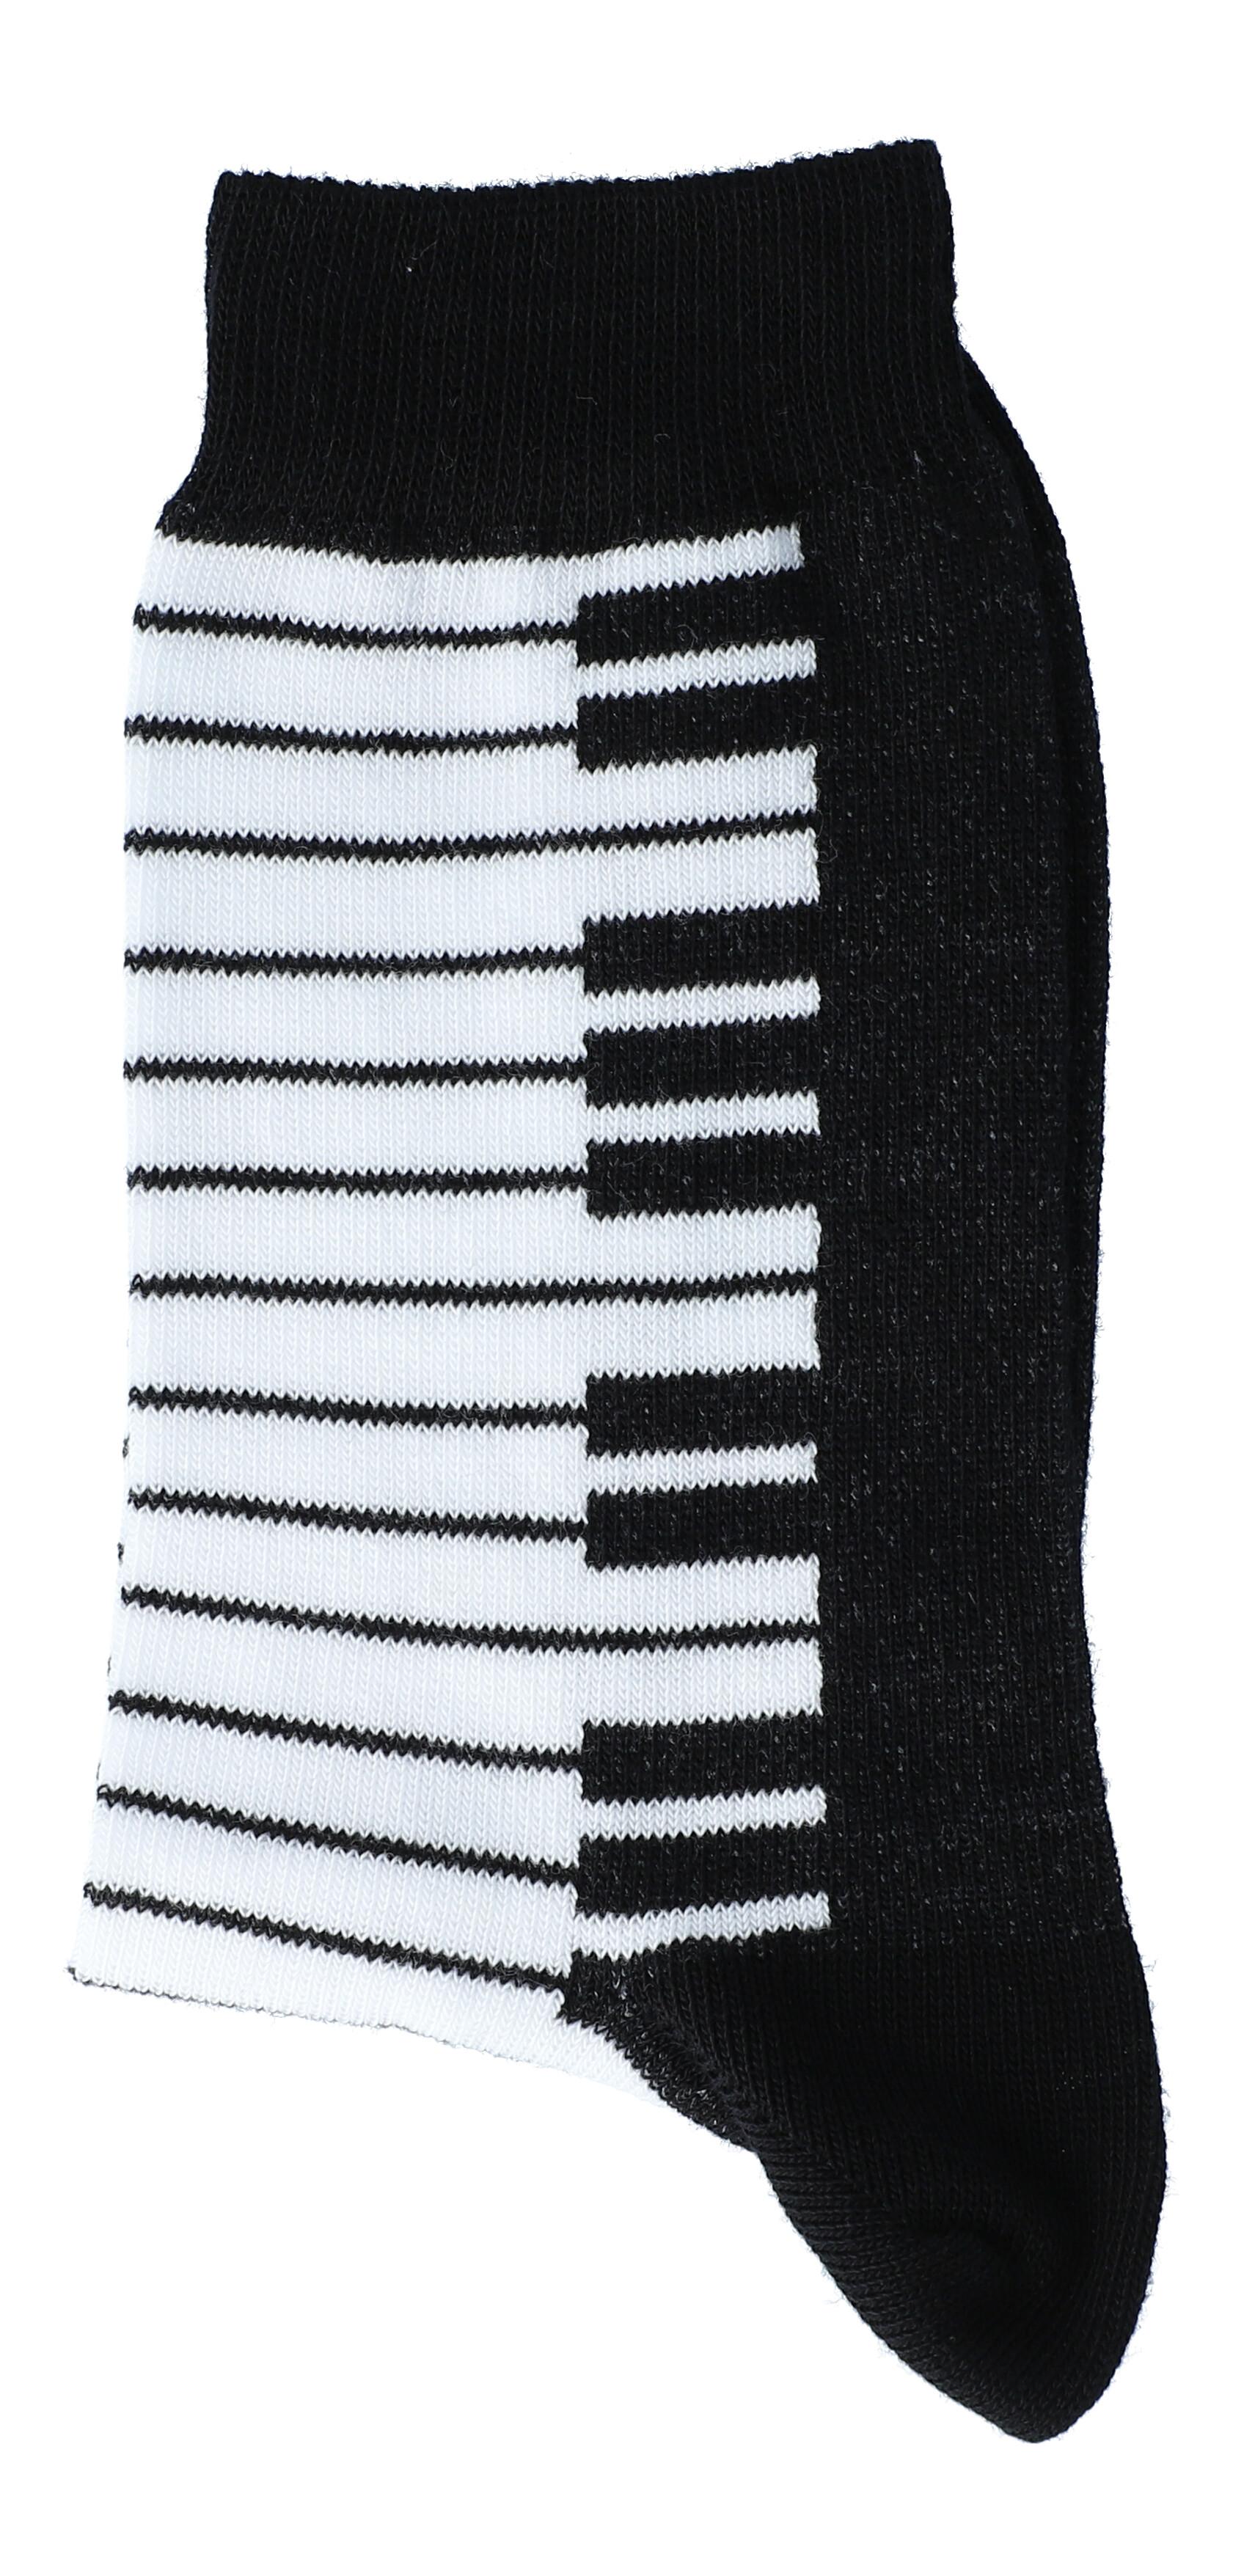 Socken Tastatur -Schwarz Gr. 43-45